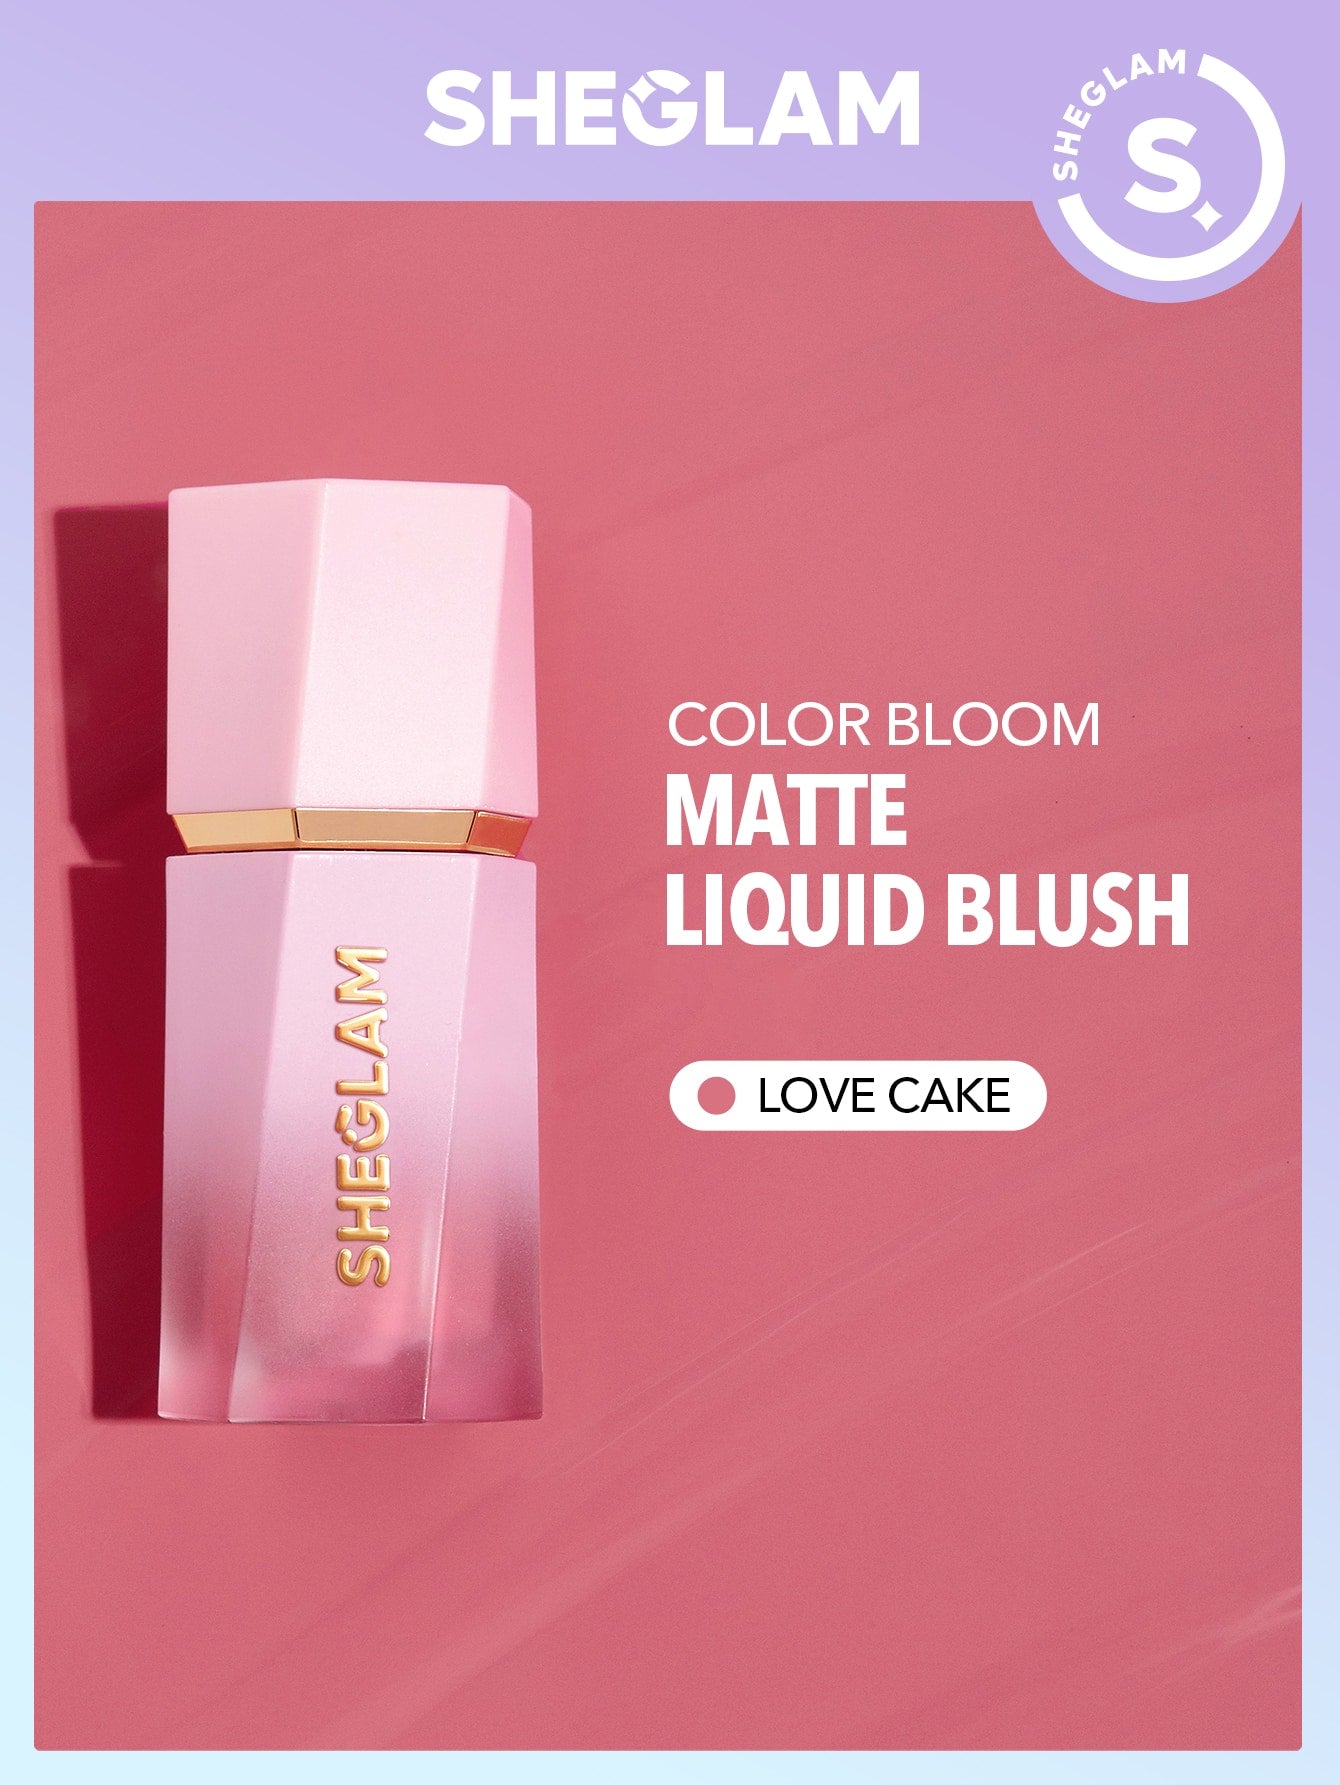 SHEGLAM Color Bloom Liquid Blush Matte Finish Love Cake